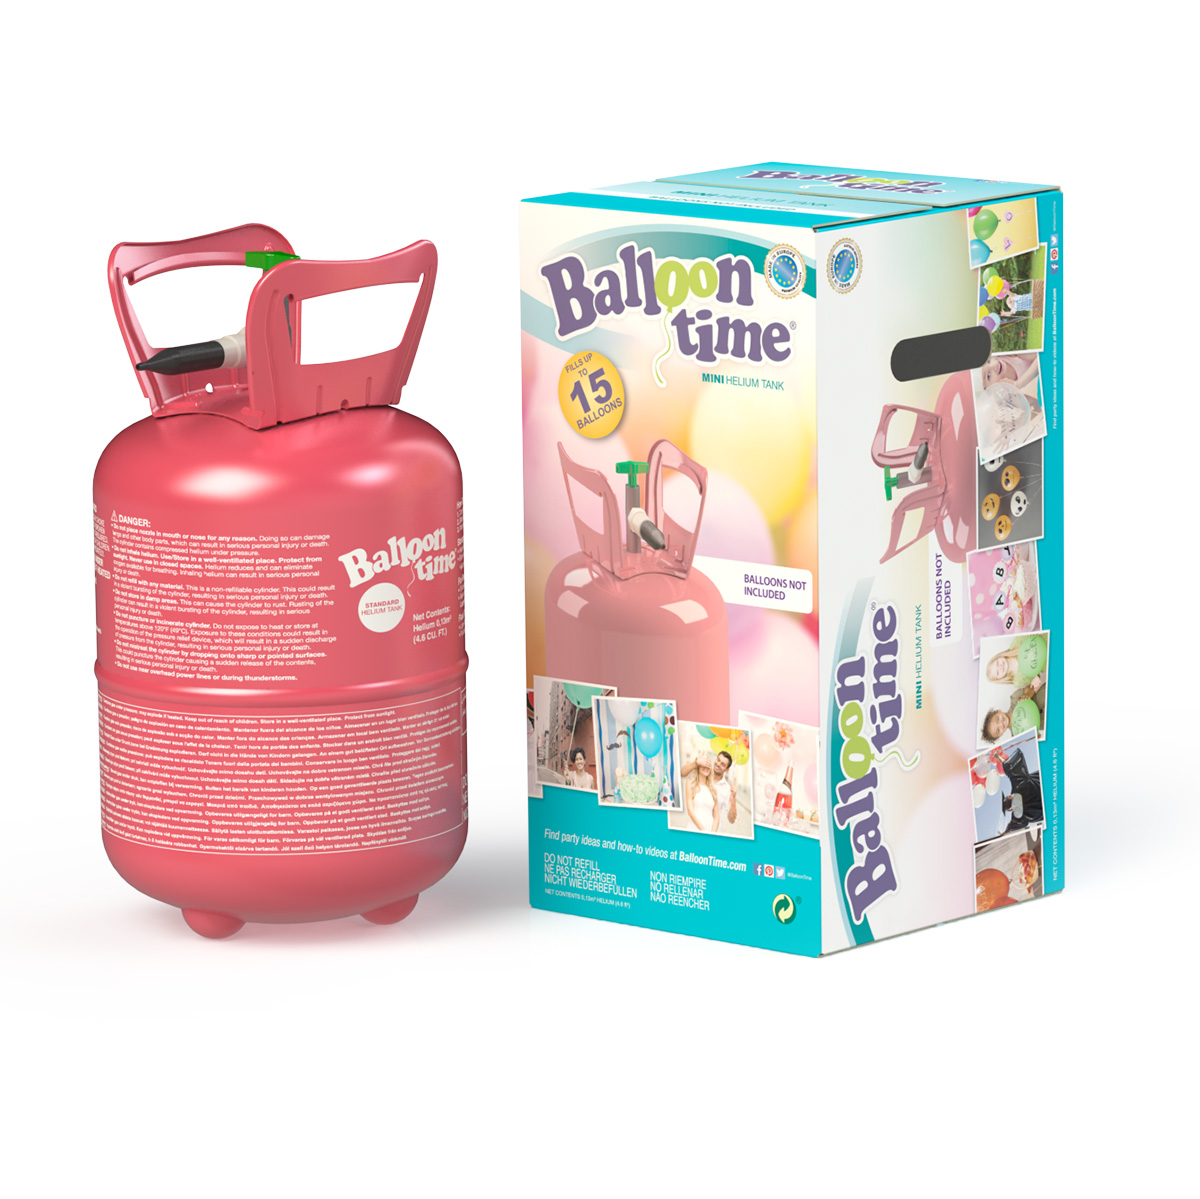 Botella de helio deschable bombona. Disfraces baratos online